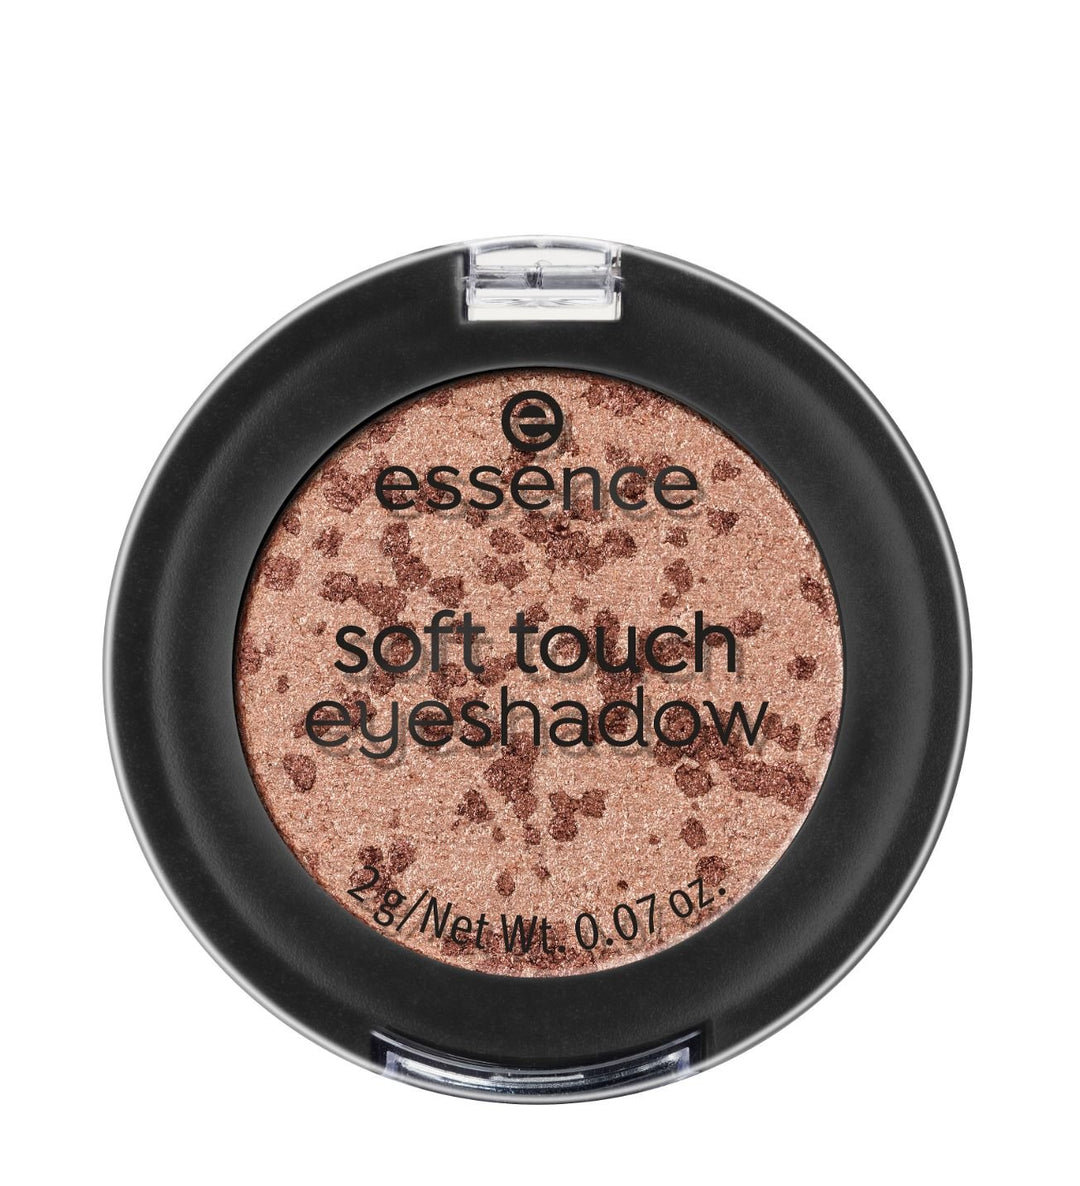 Soft Touch Eyeshadow